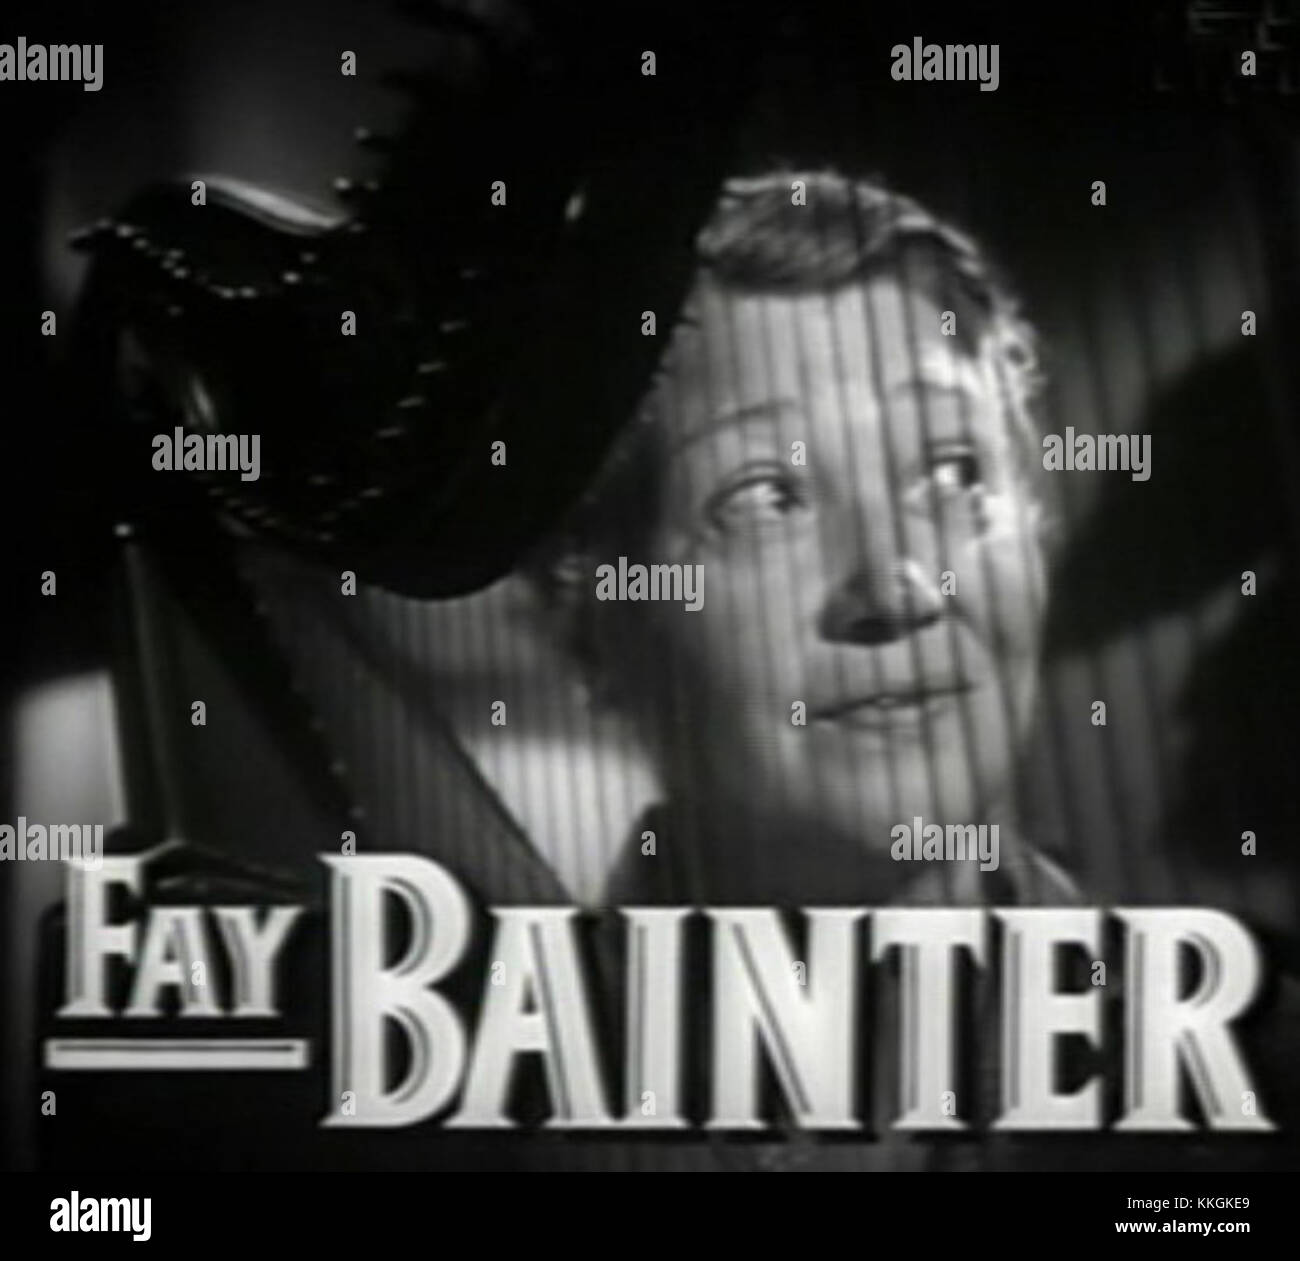 Fay Bainter in The Human Comedy trailer Stock Photo